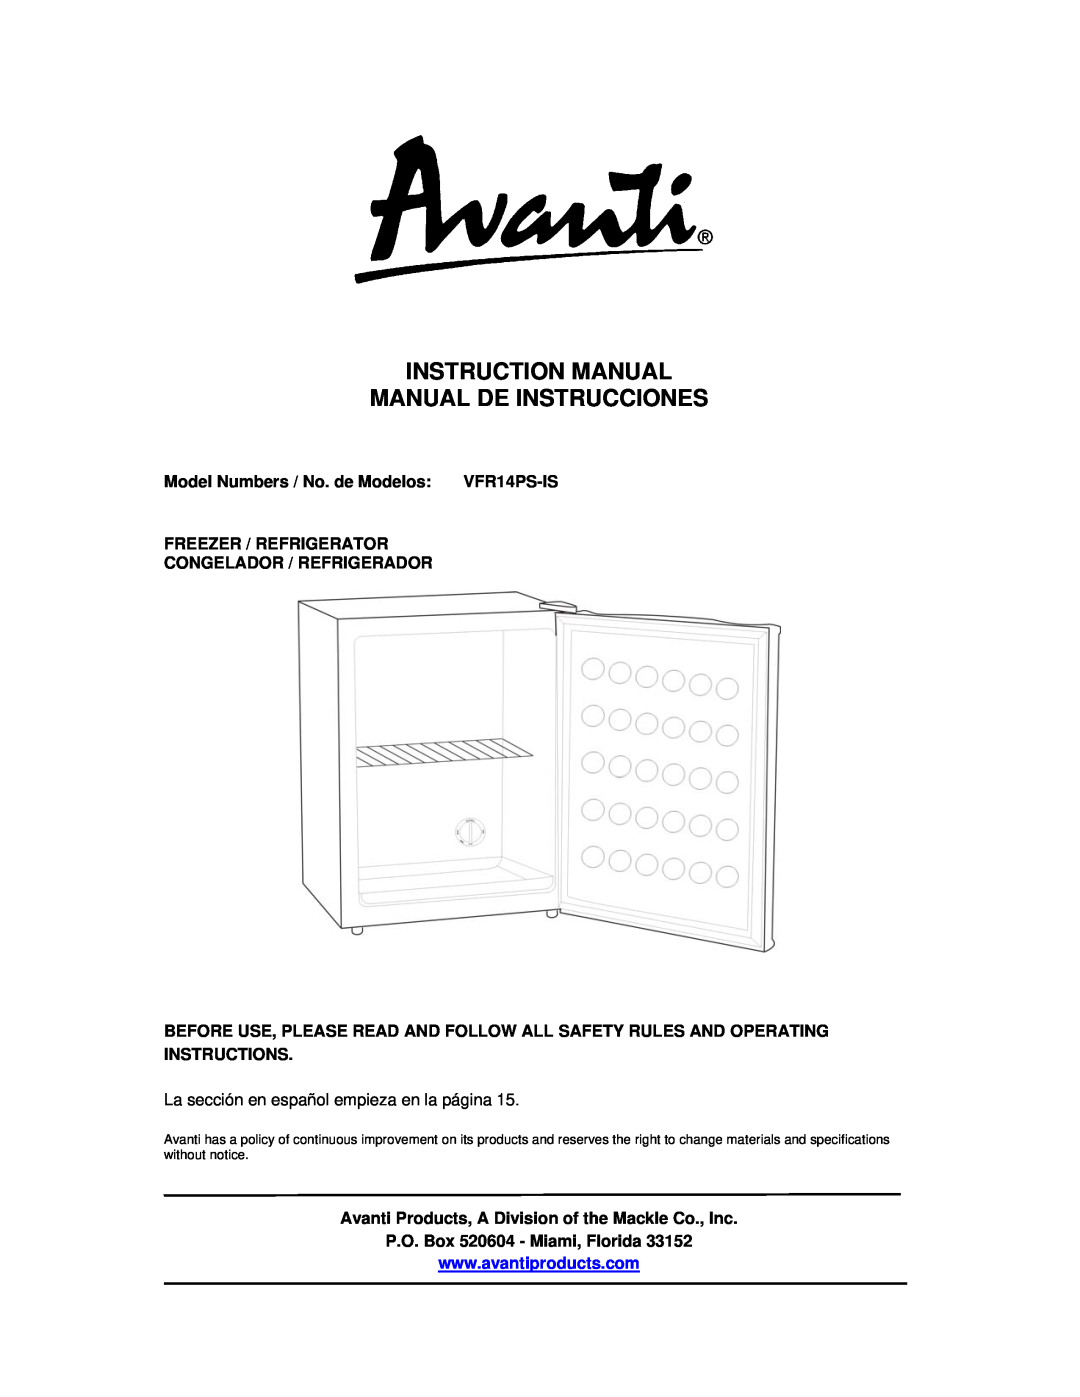 Avanti VFR14PS-IS instruction manual Model Numbers / No. de Modelos, Freezer / Refrigerator Congelador / Refrigerador 